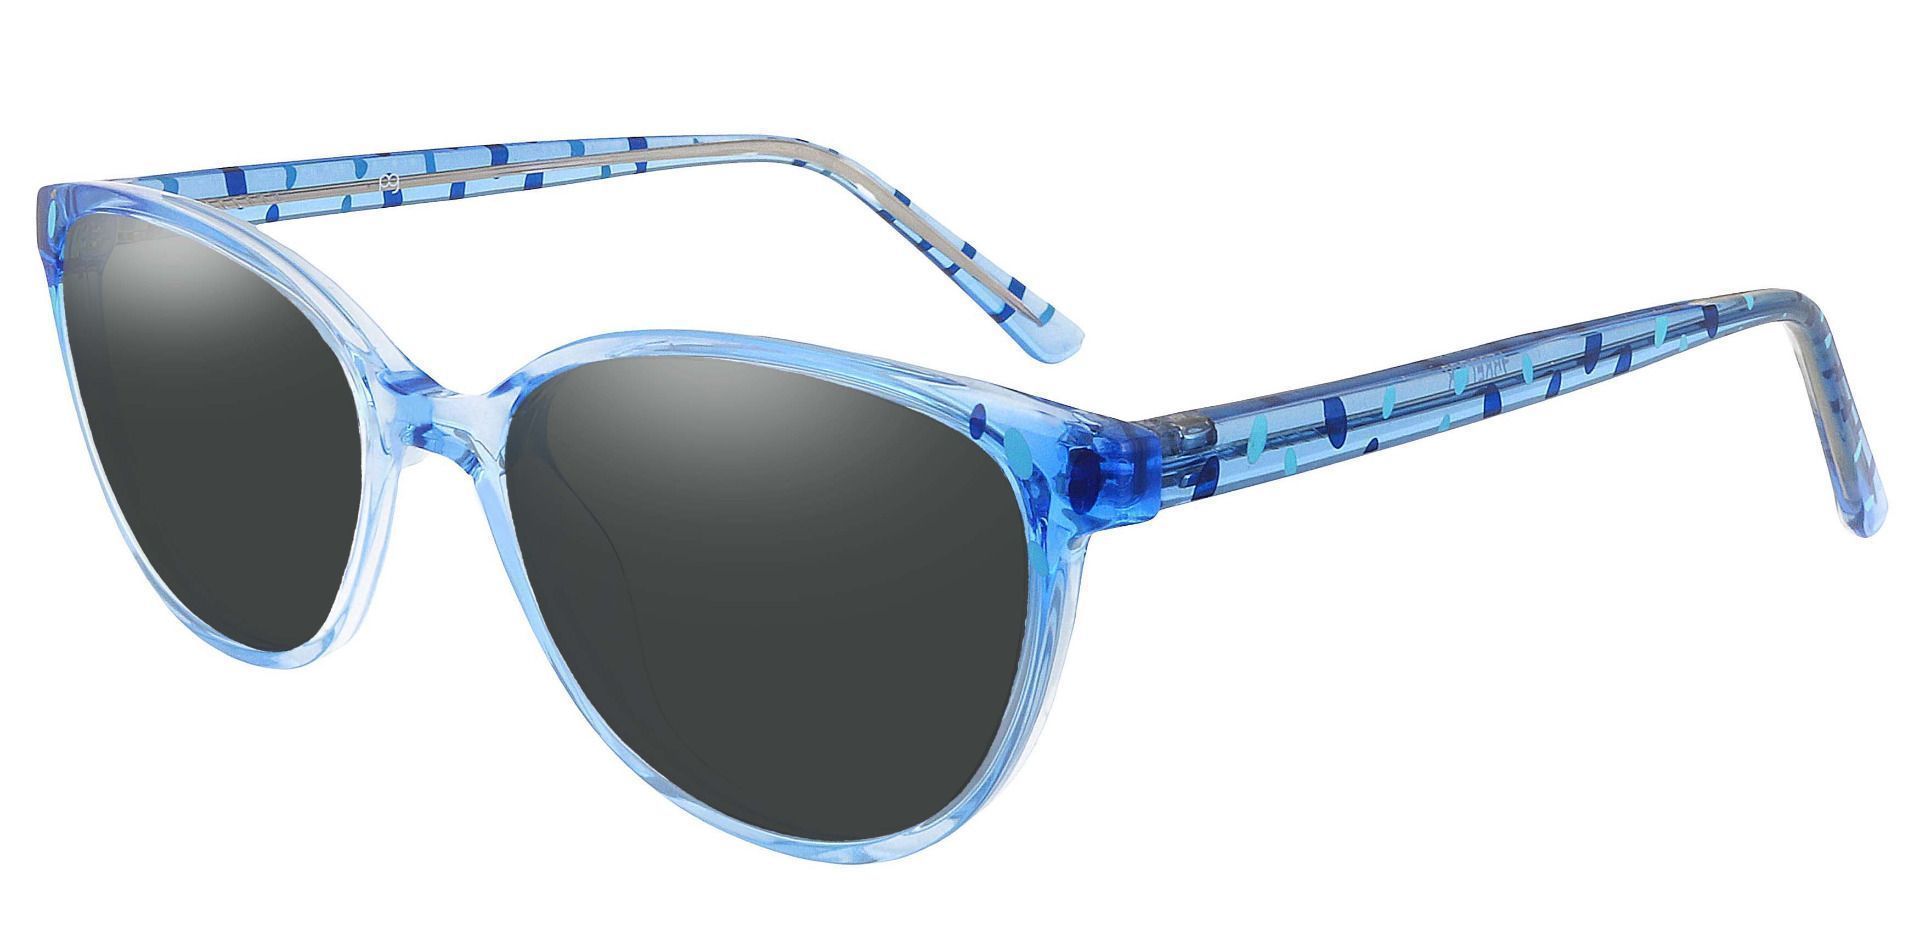 Carma Oval Prescription Sunglasses - Blue Frame With Gray Lenses